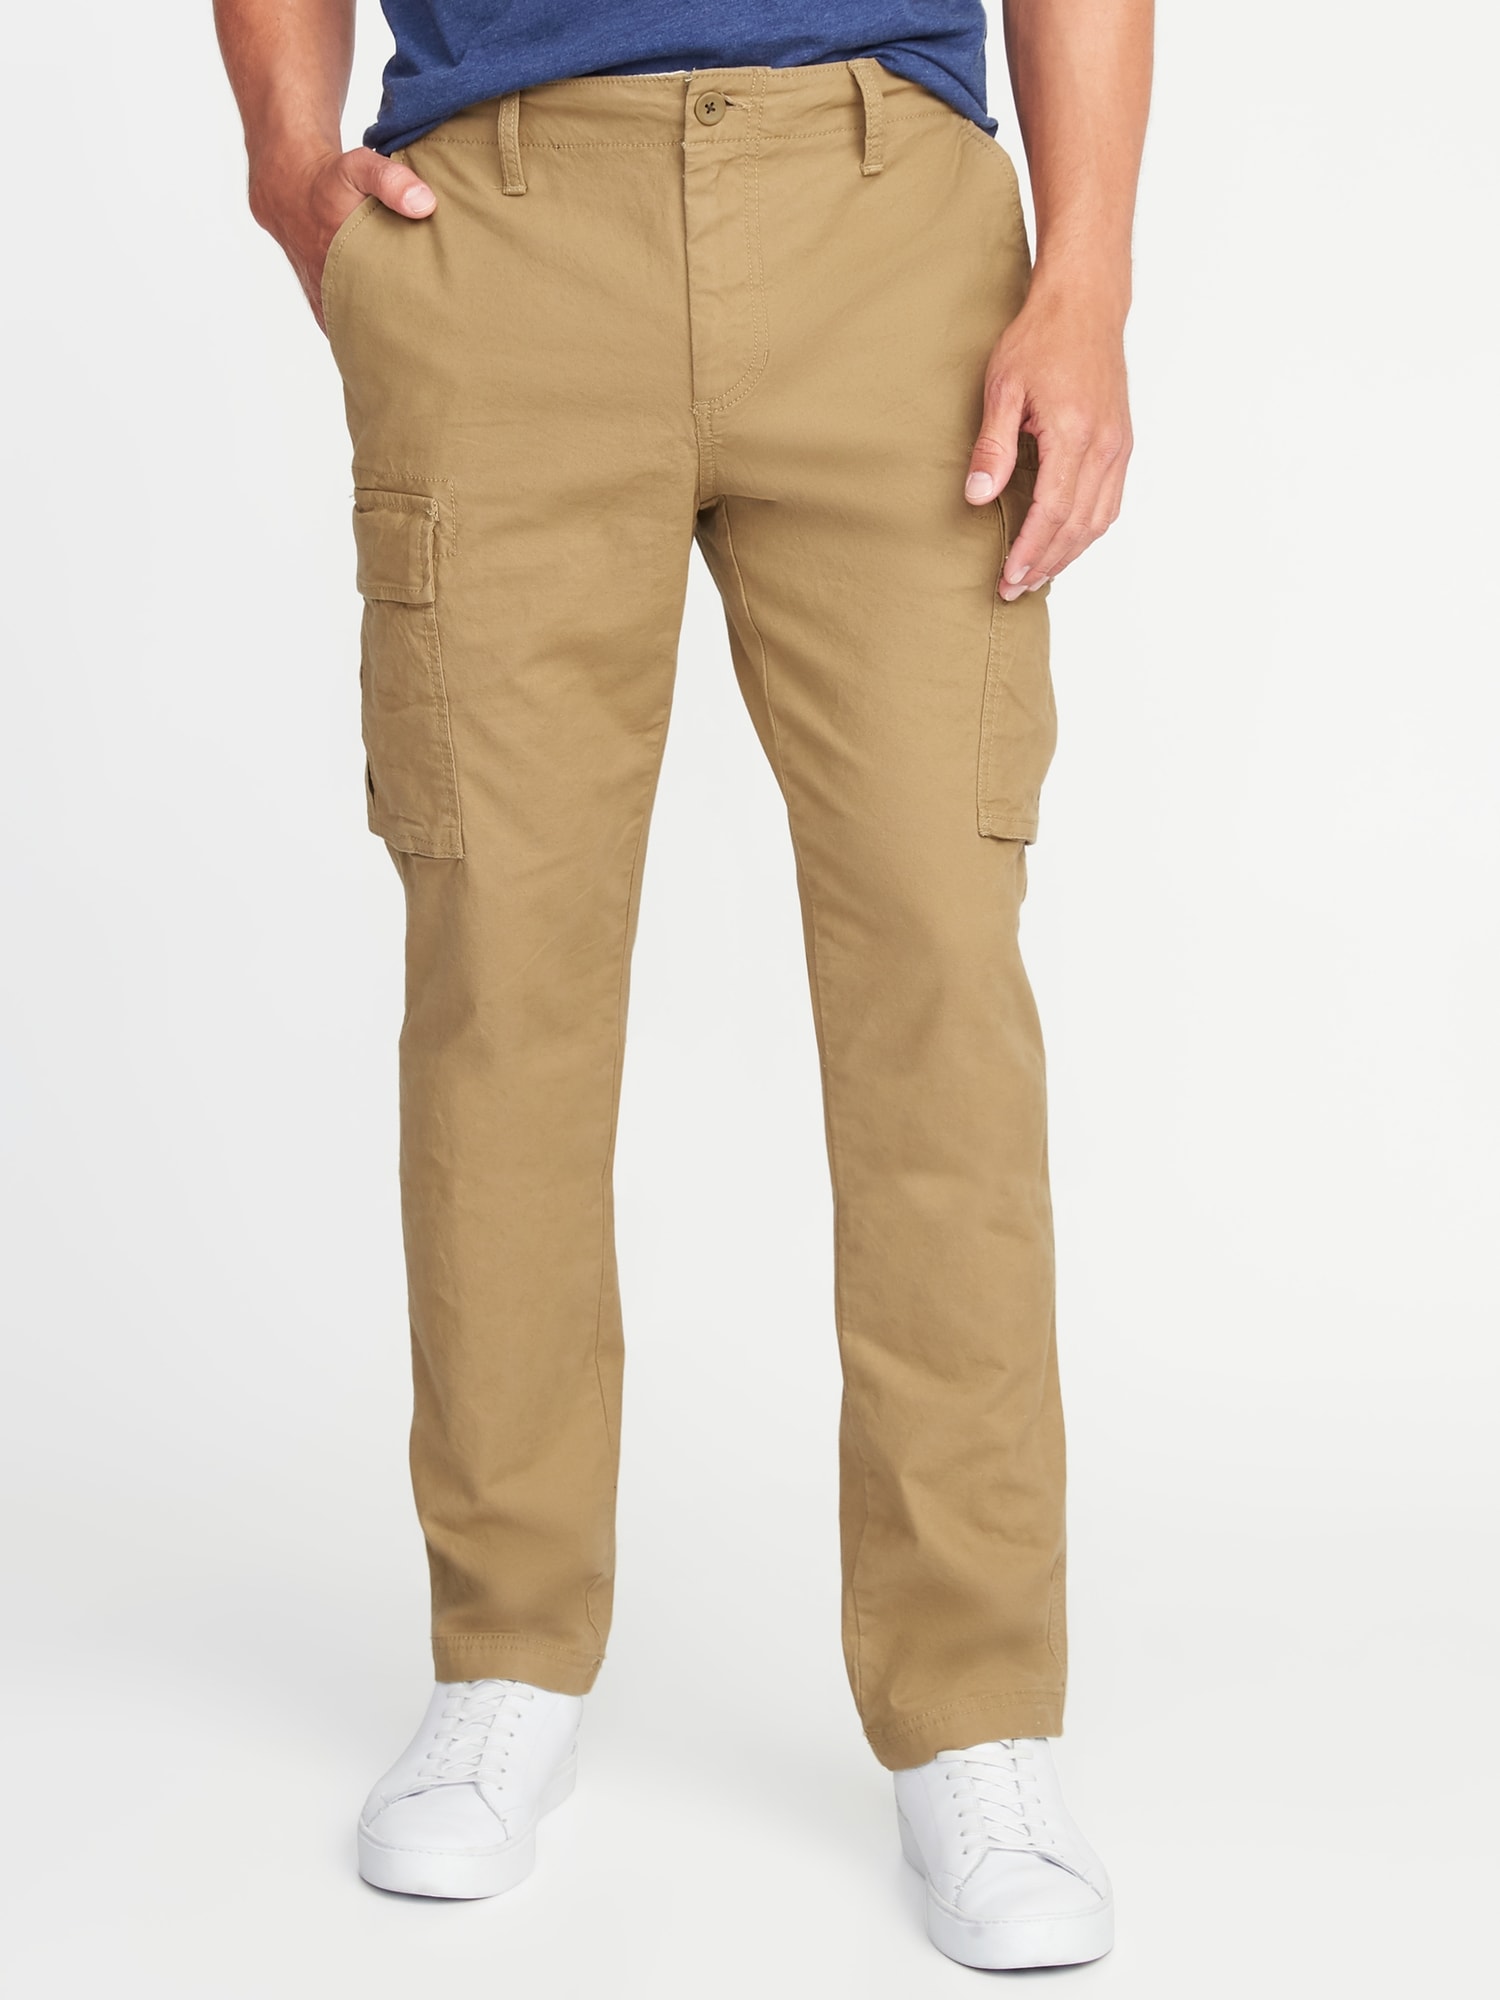 gap cargo pants